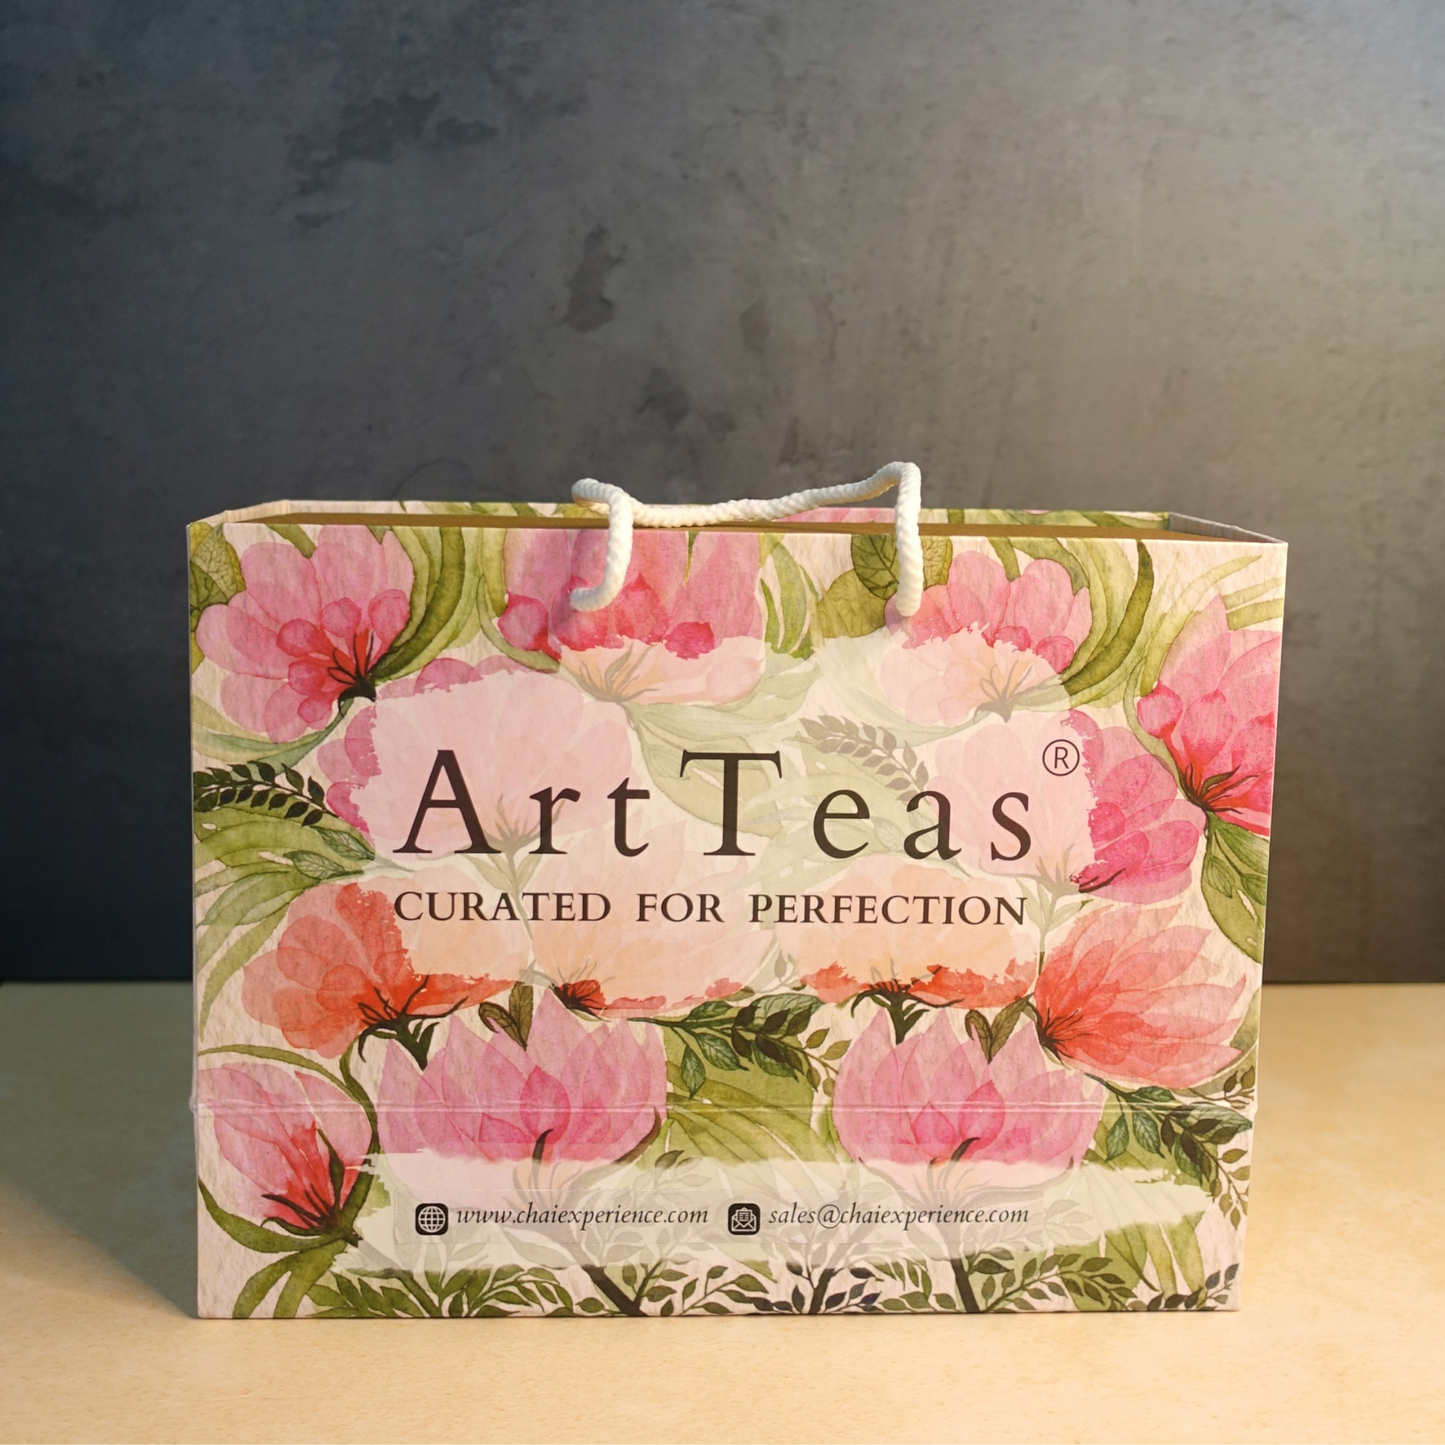 Buy Online: ArtTeas Tea Gift Boxes :Chai Experience